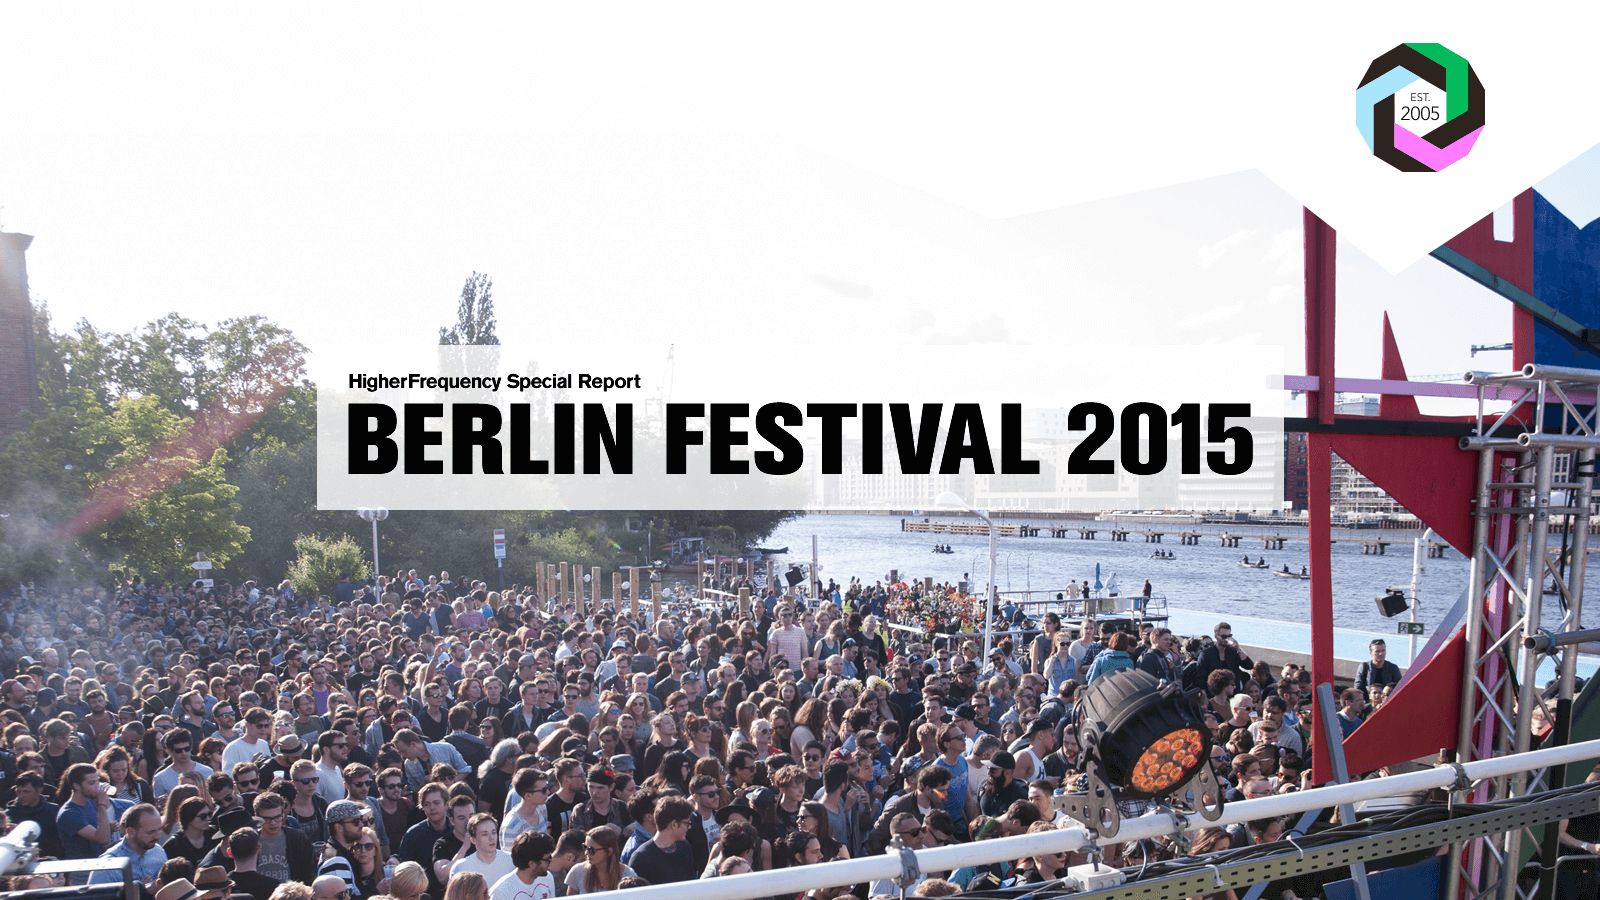 BERLIN FESTIVAL 2015